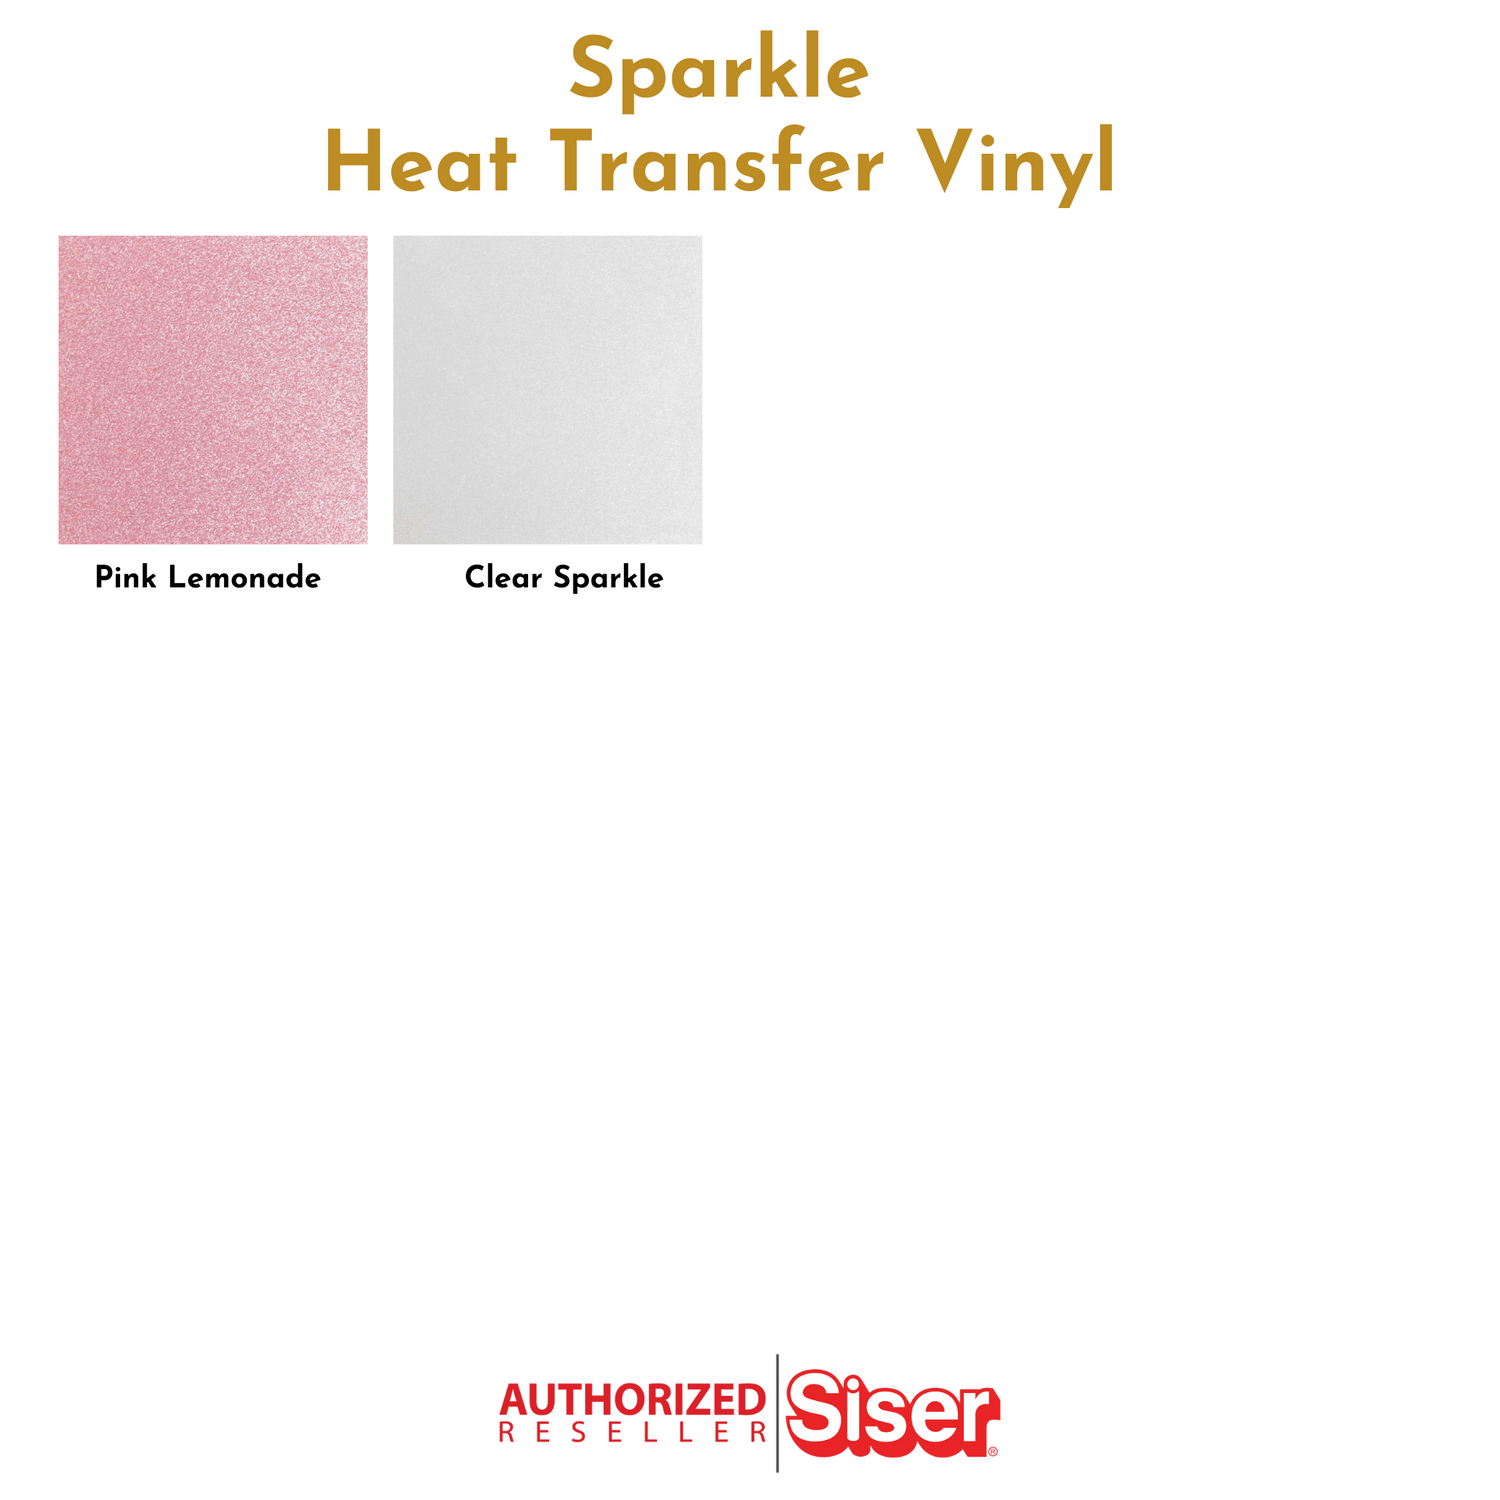 Sparkle Heat Transfer Vinyl